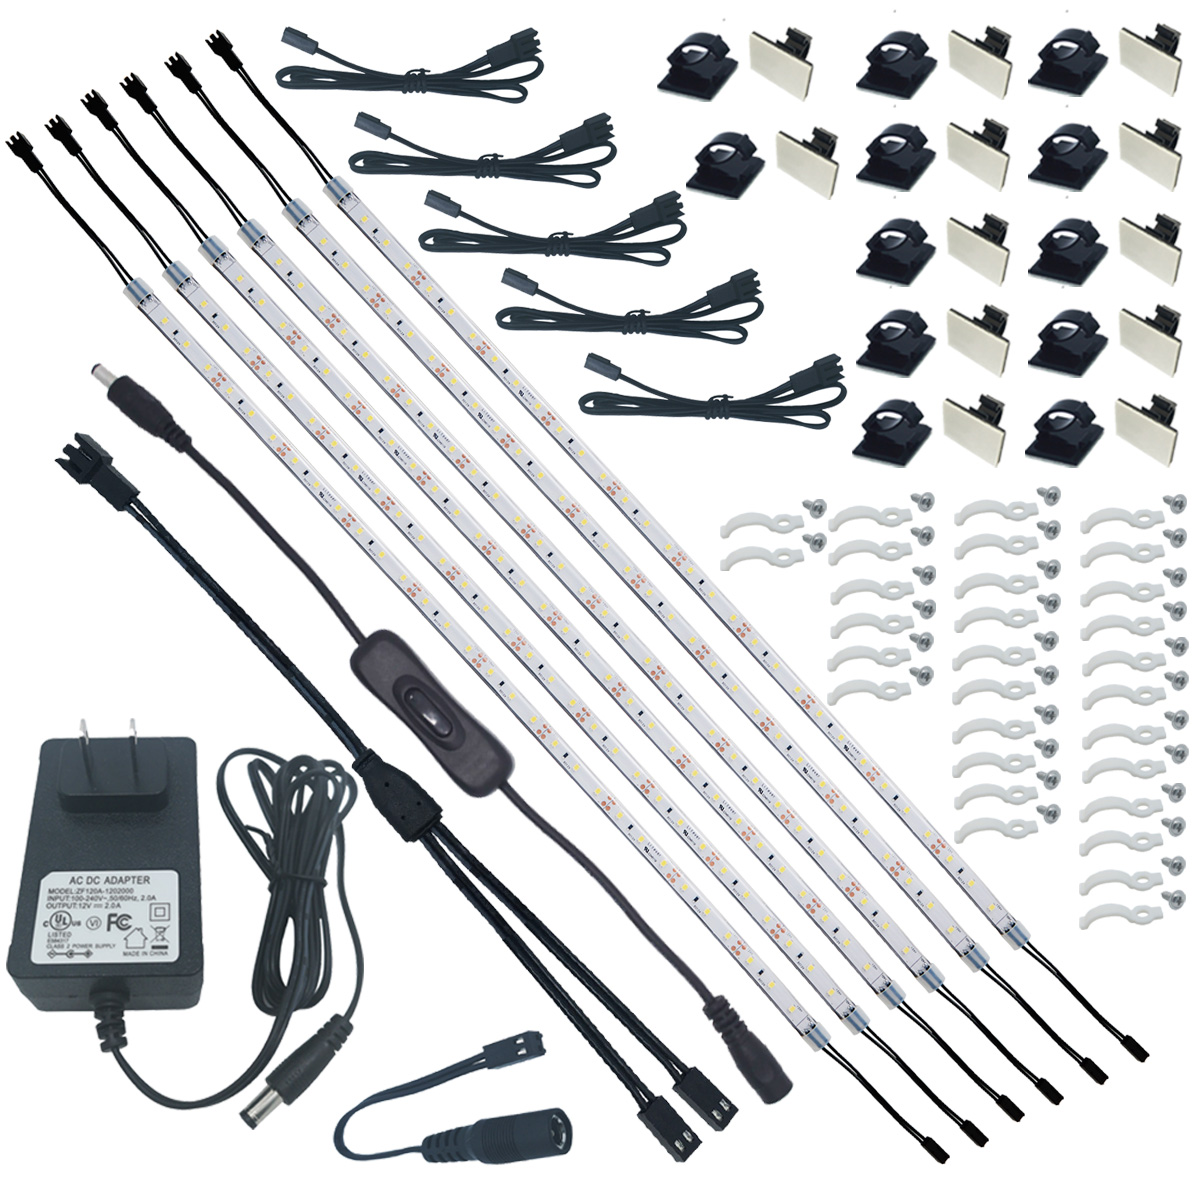 Litever Under Cabinet LED Light Bar Kits Plug in 3 pcs 12 inches Light Bars kit 